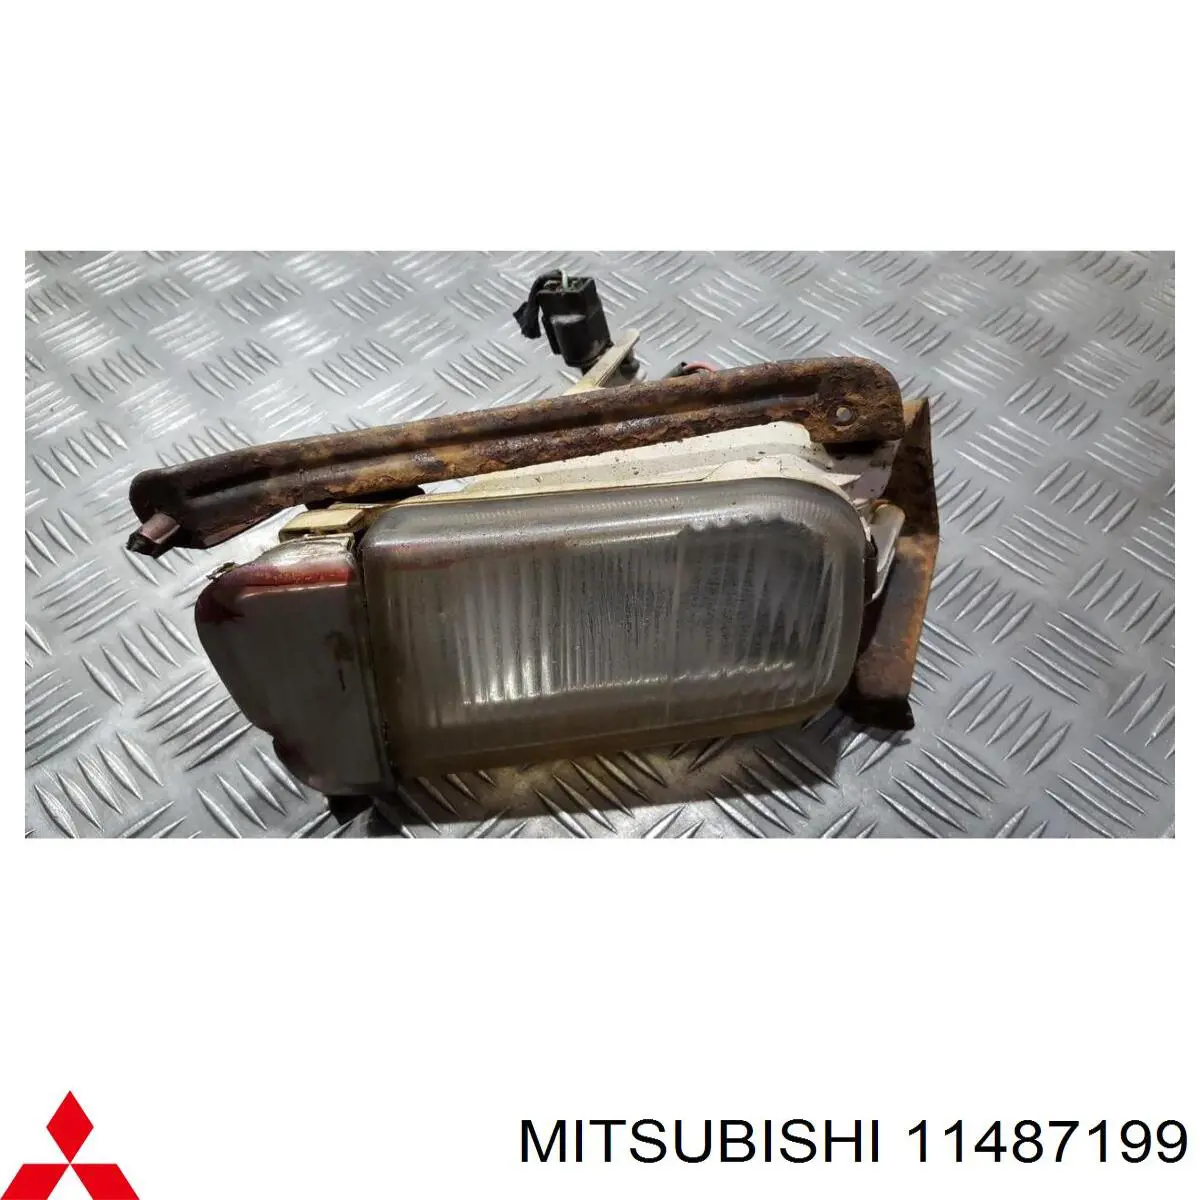 11487199 Mitsubishi luzes de nevoeiro esquerdas